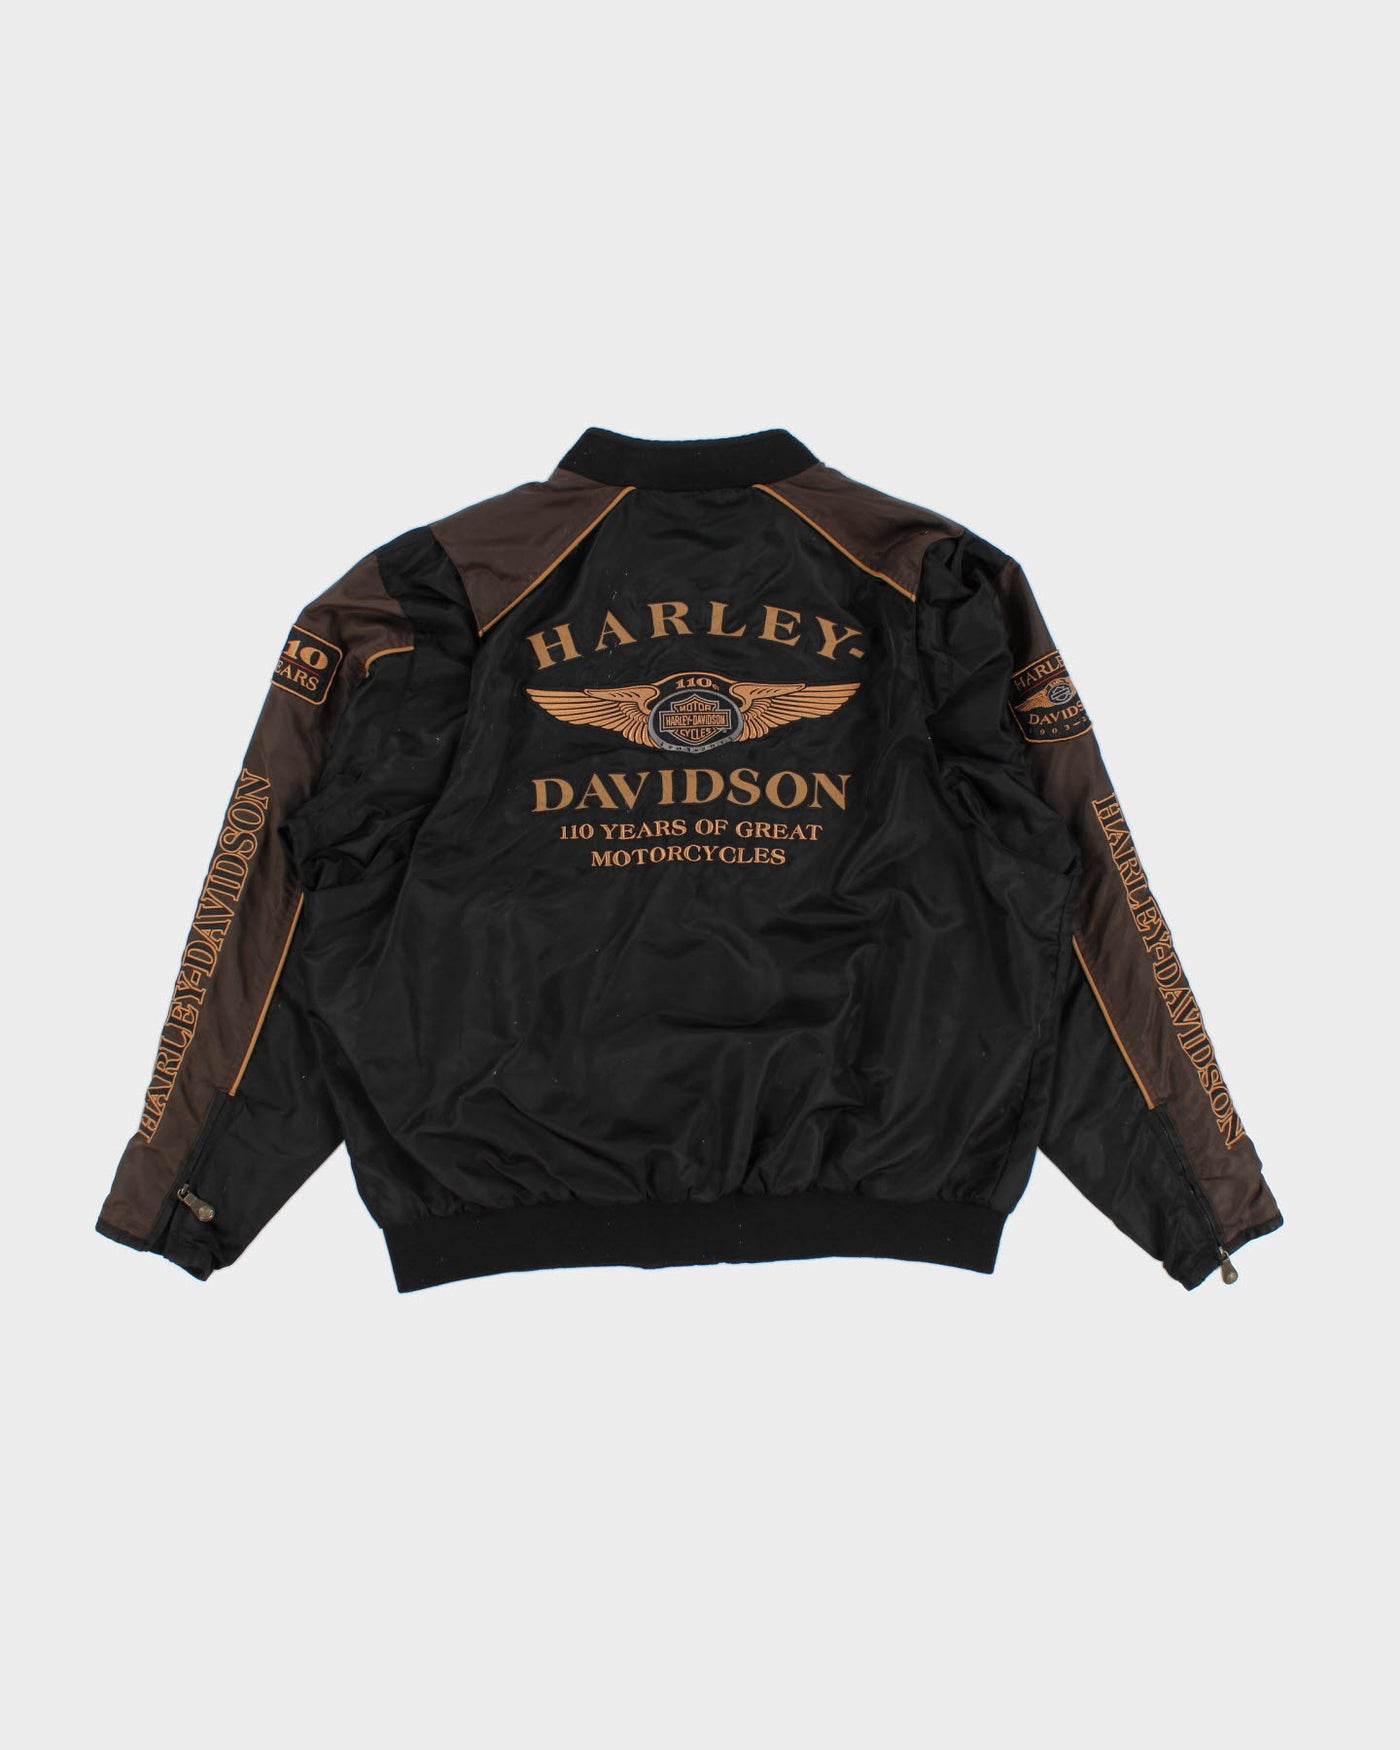 Harley Davidson 110 Years Bomber Jacket - XL